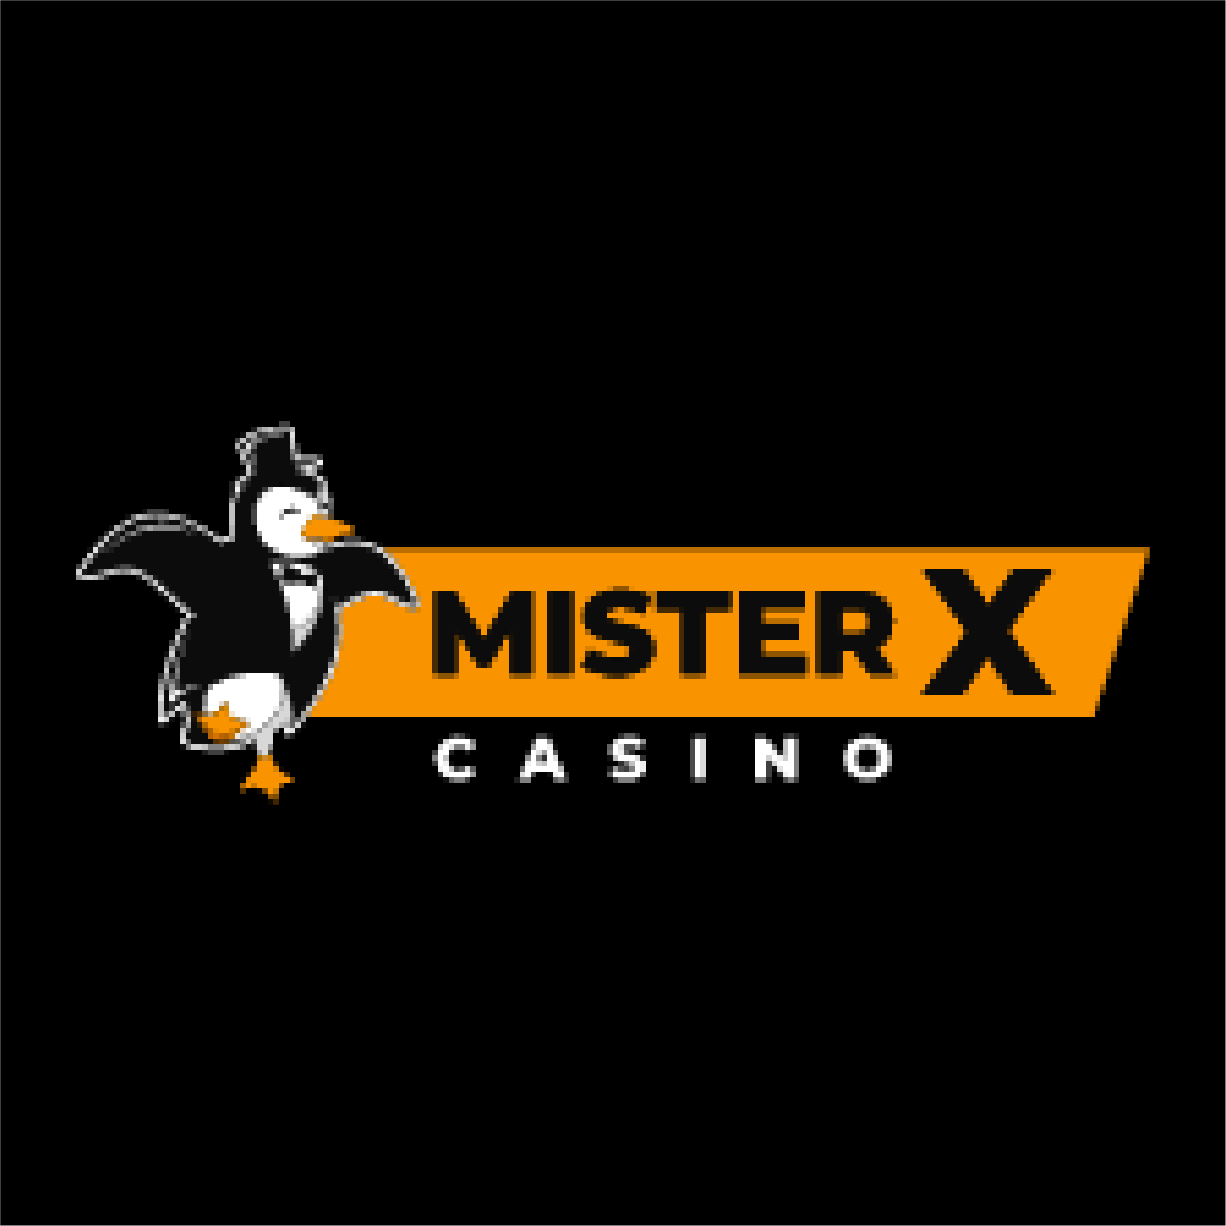 mister x casino logo 1226x1226 transparent background